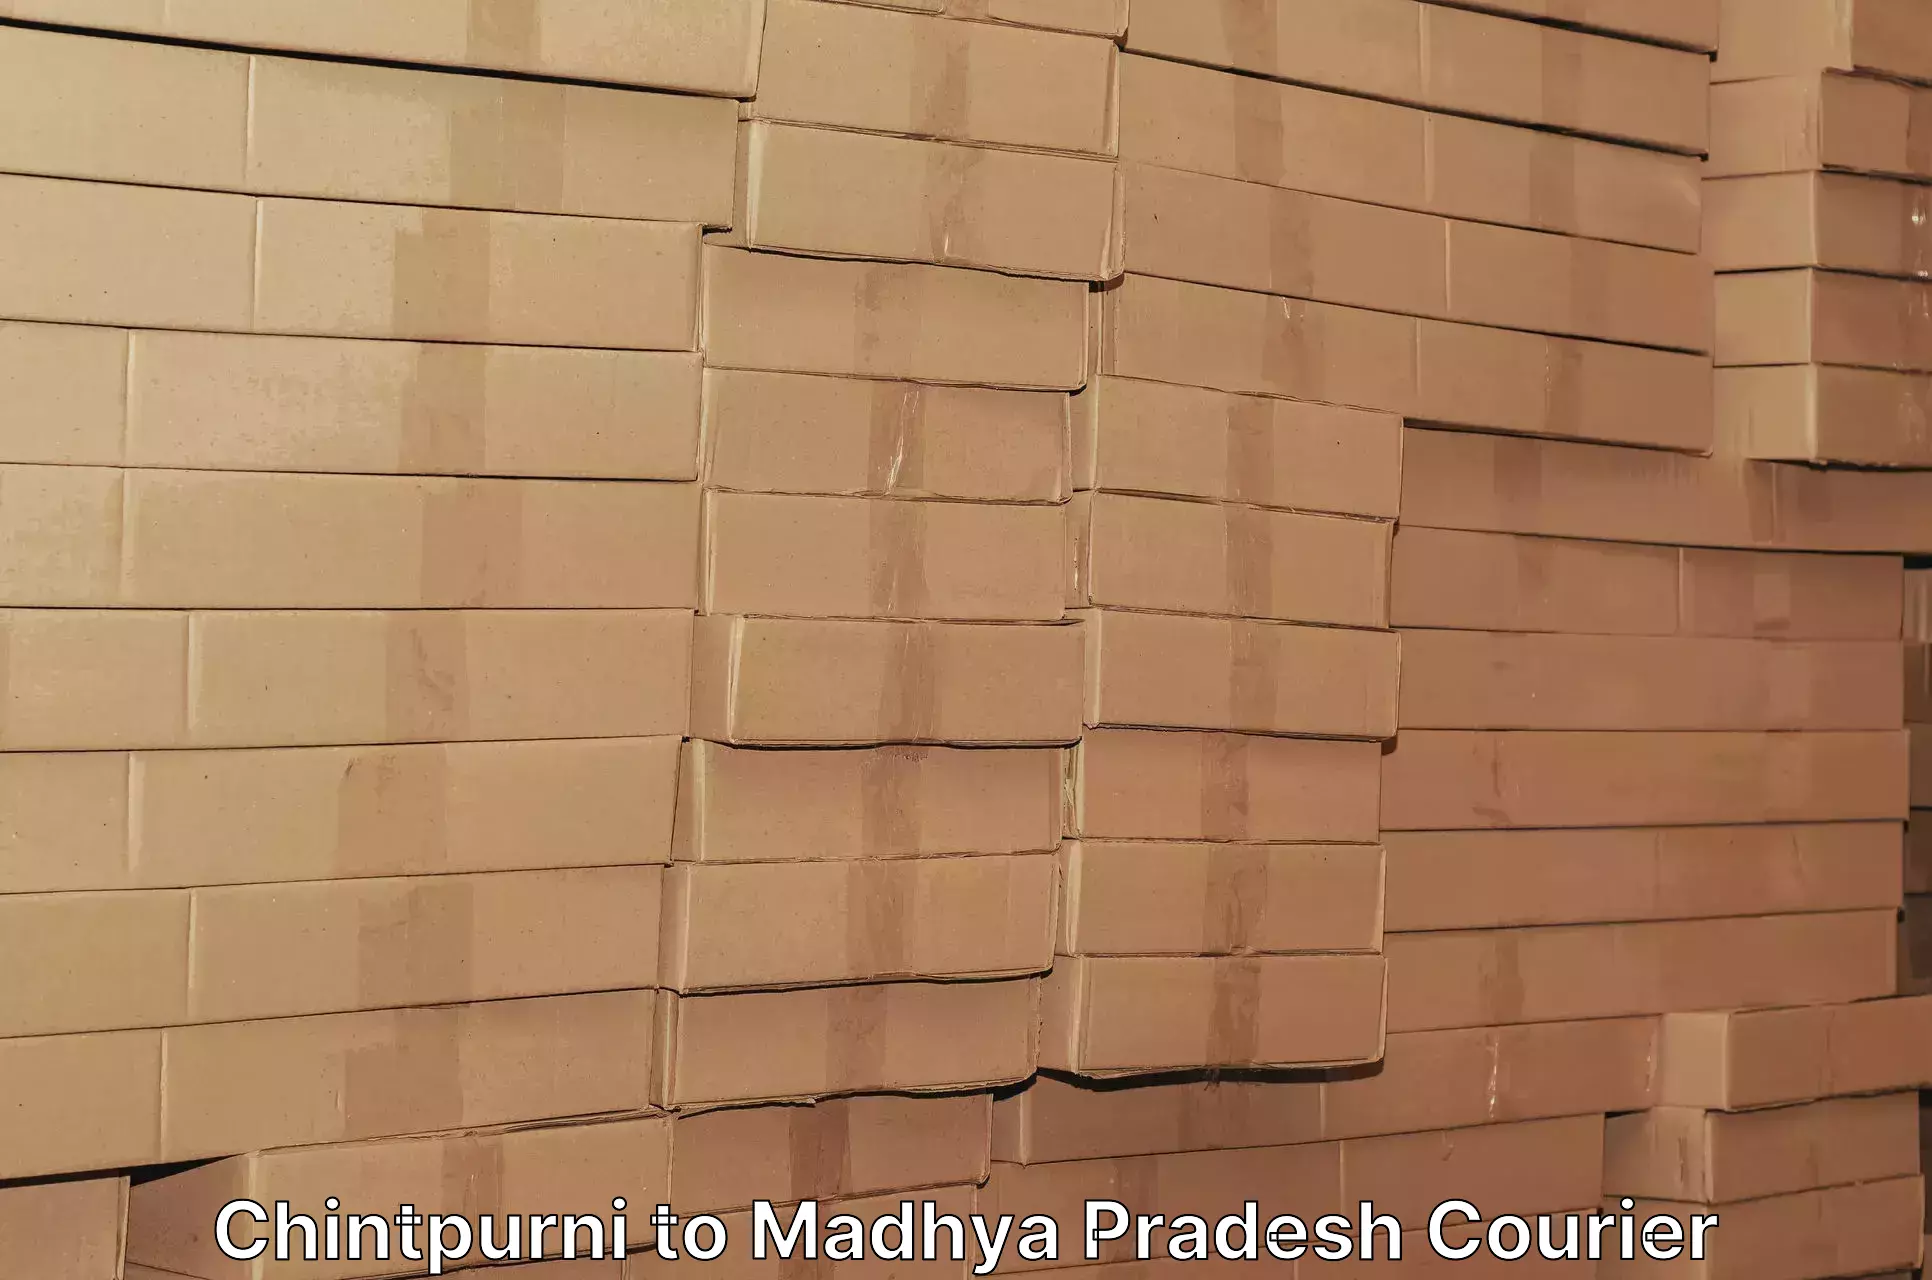 Efficient logistics management Chintpurni to Madhya Pradesh